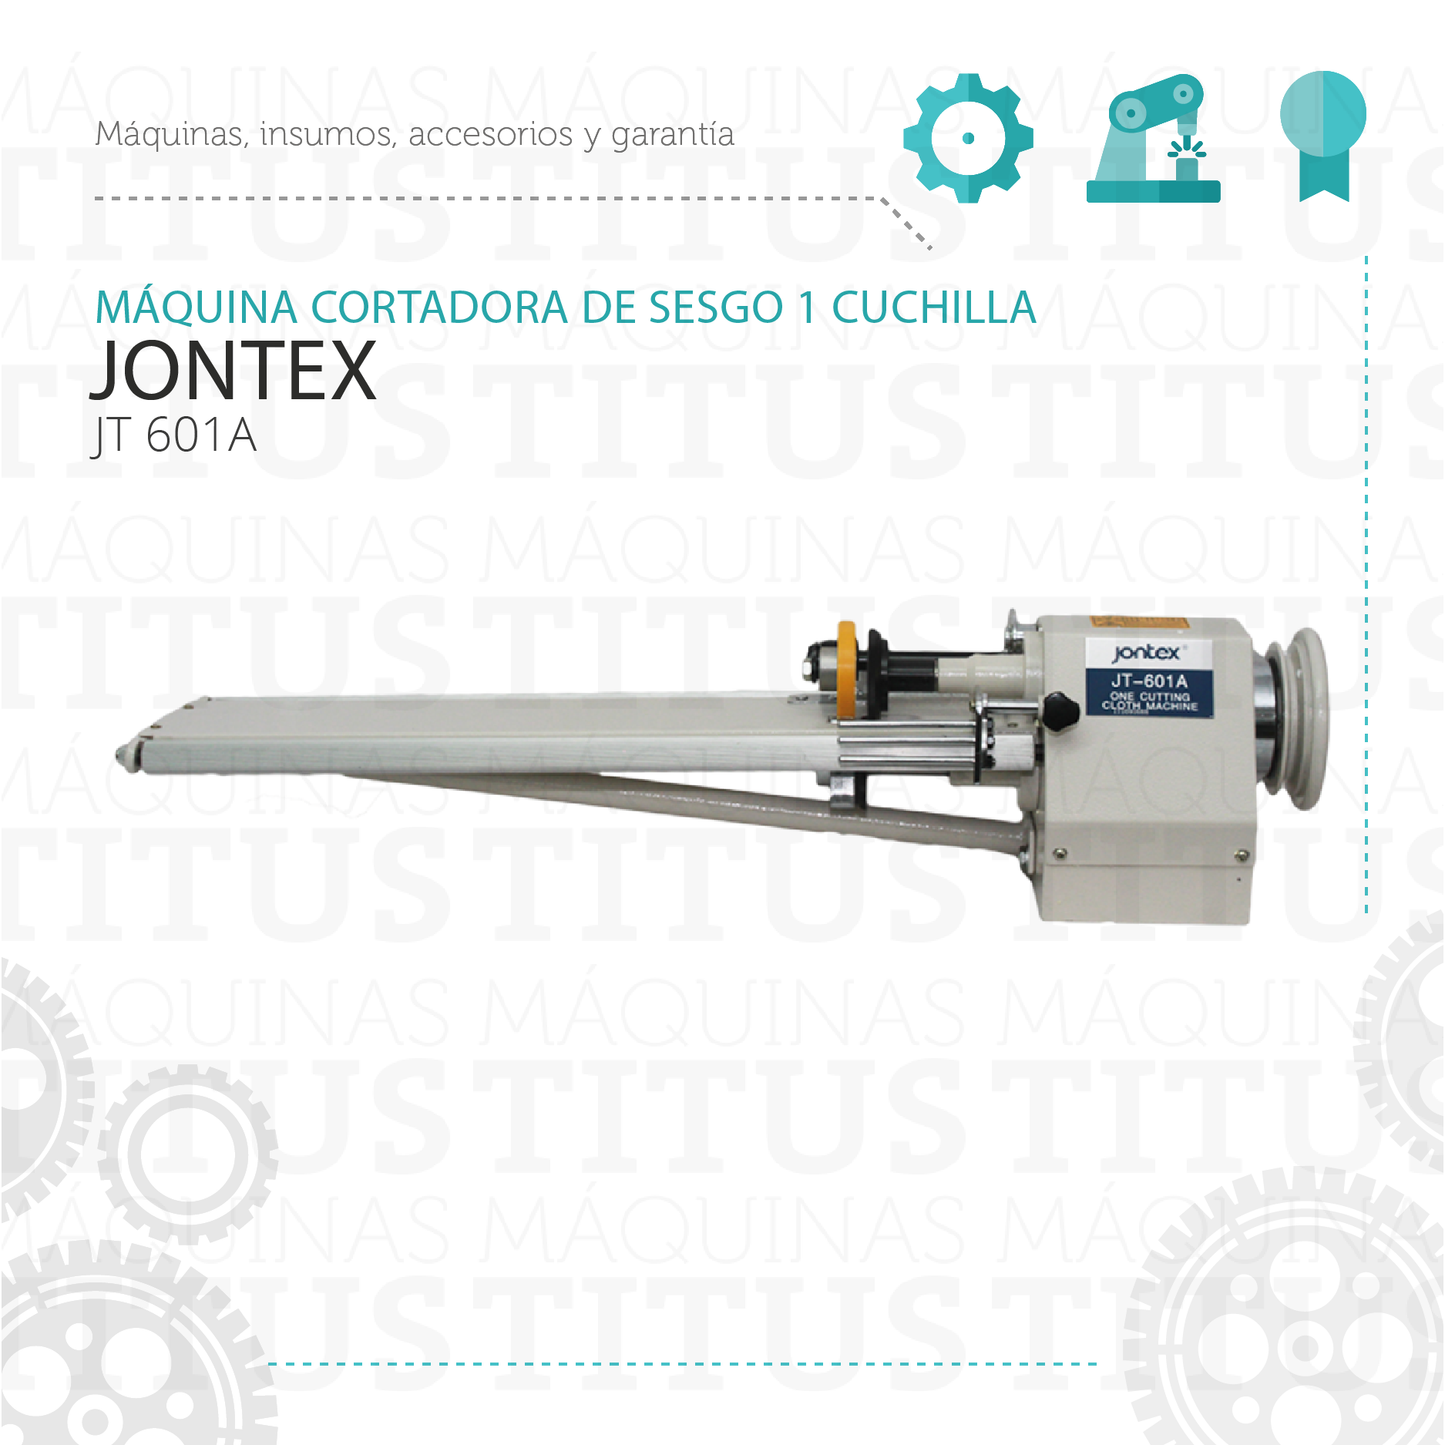 Cortadora De Sesgo Jontex JT 601A Maquina De Corte 1 Cuchill - Commercio